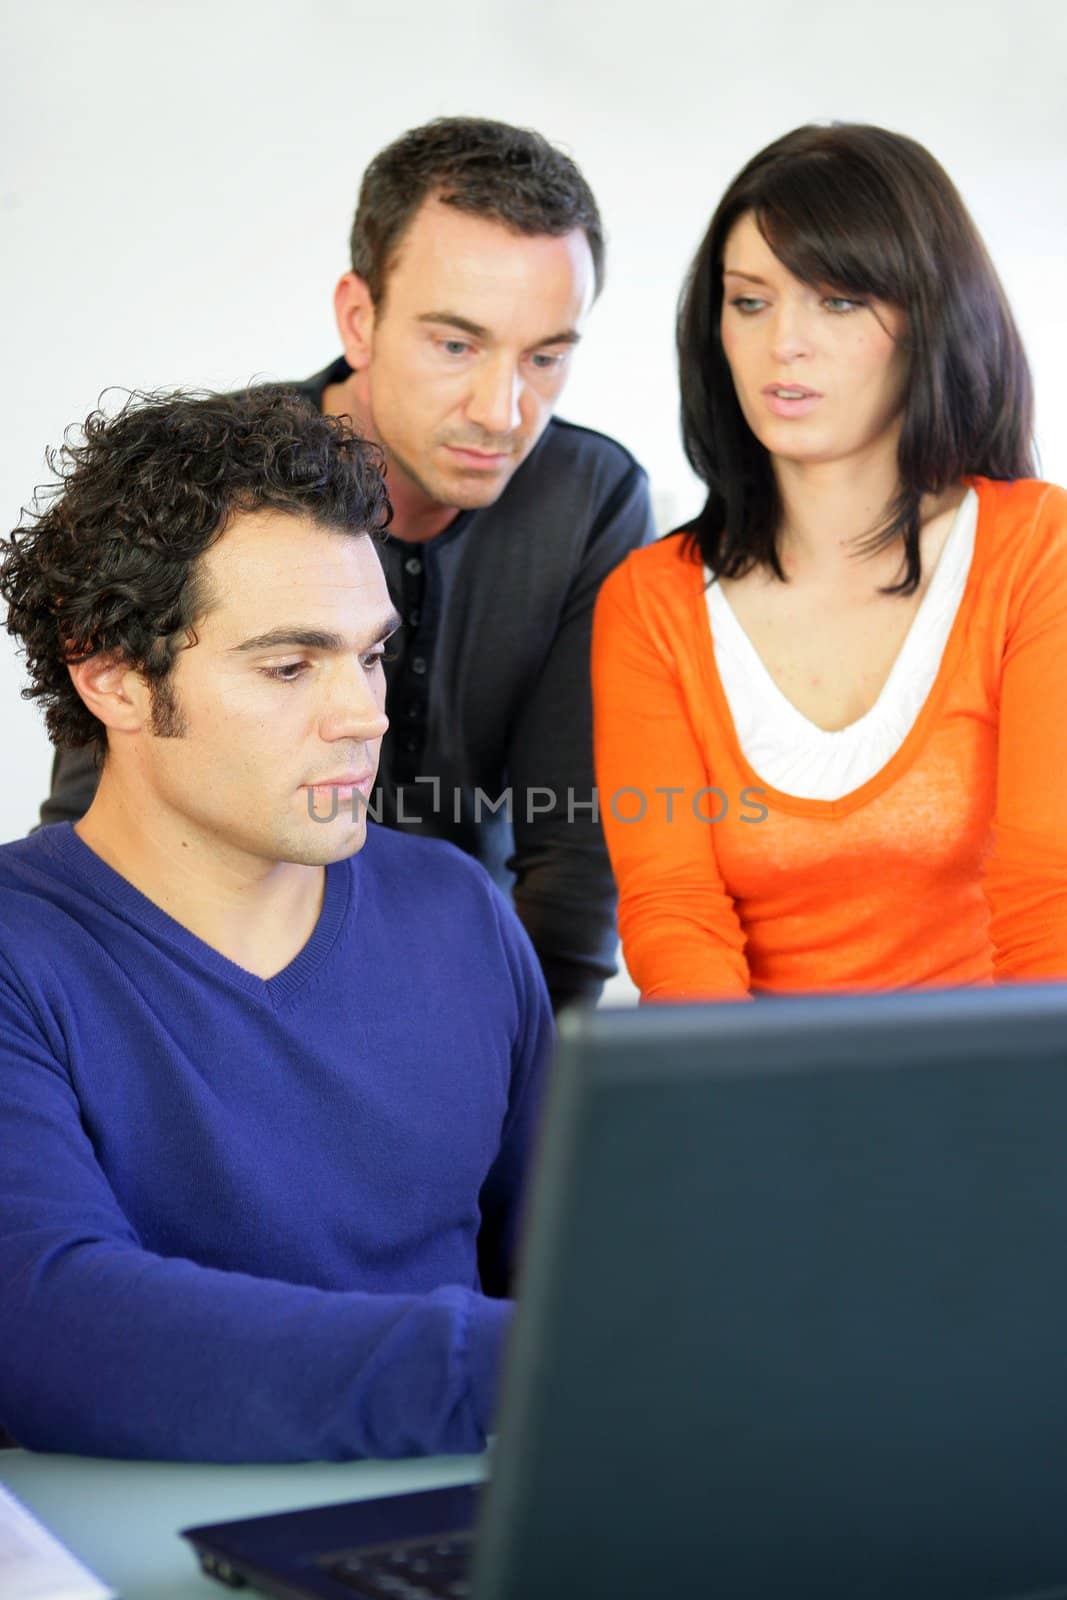 Three workers gathered around laptop